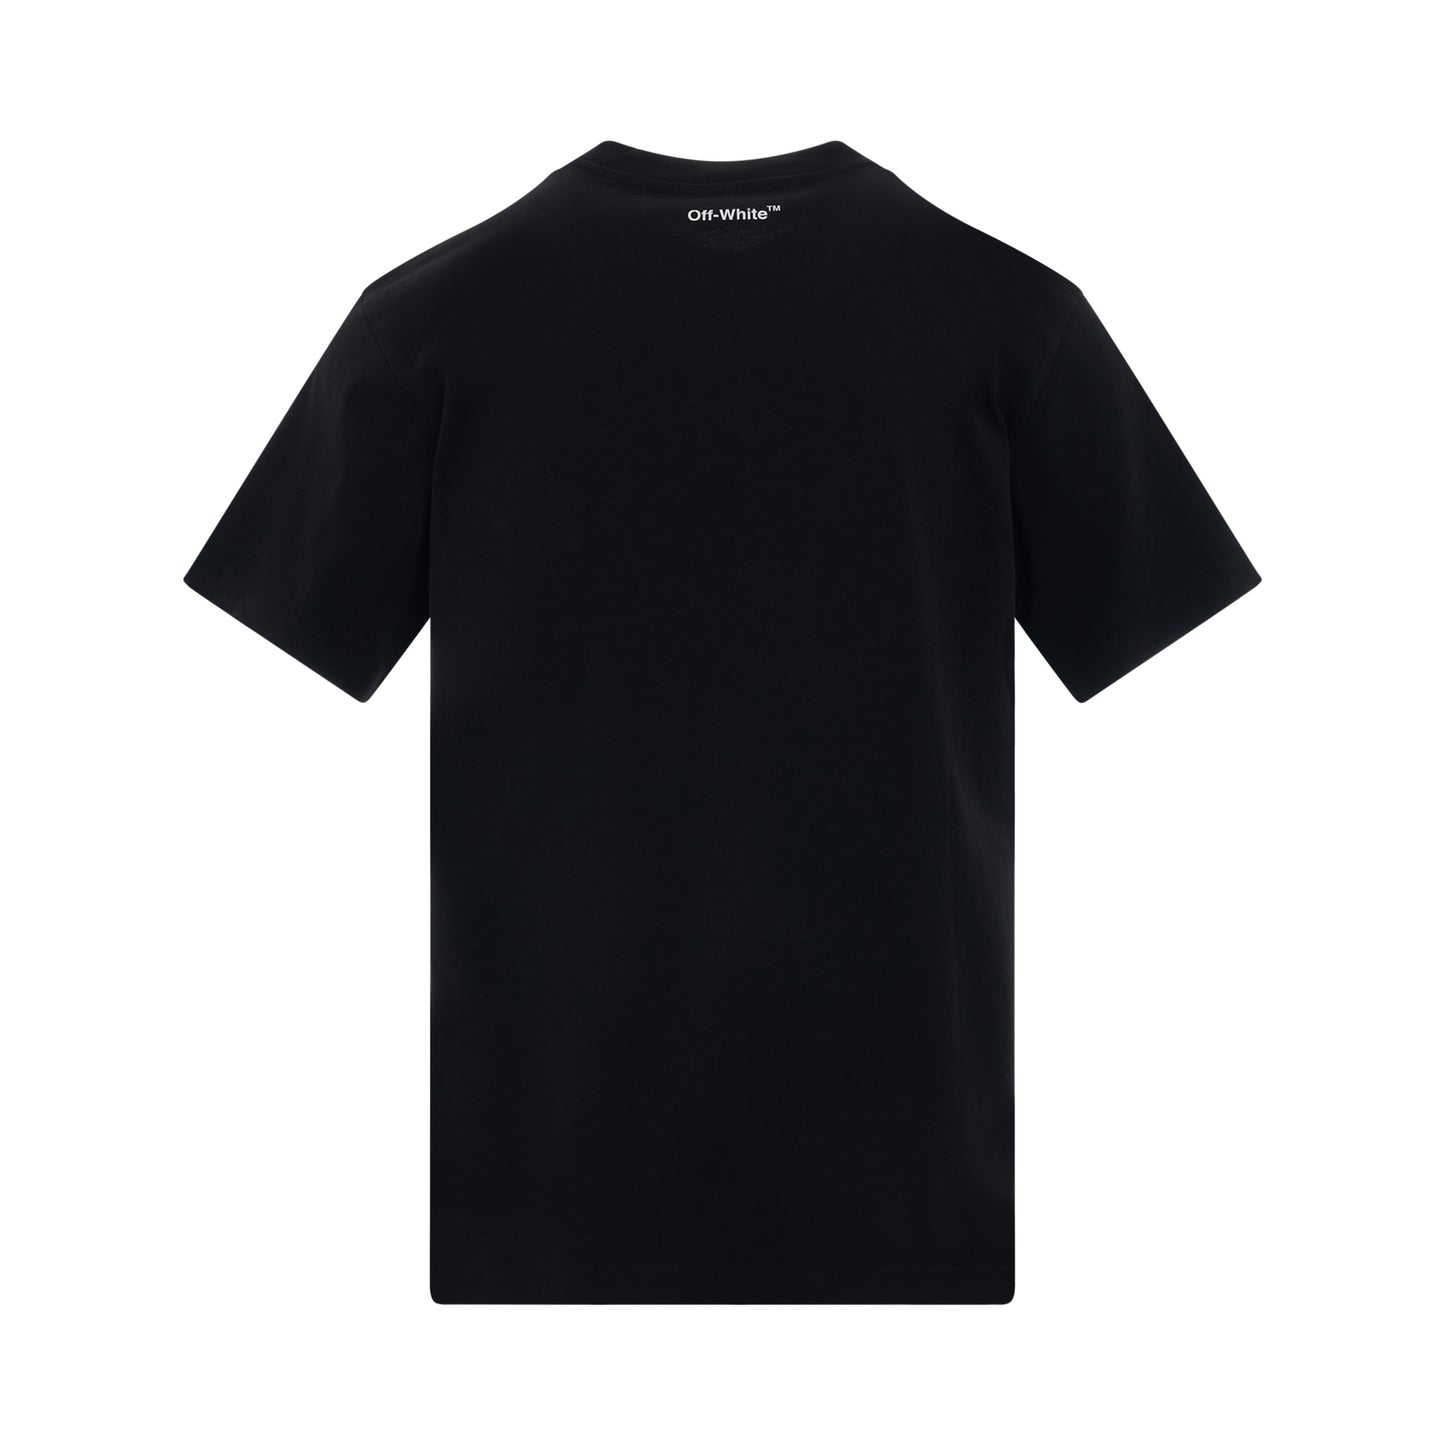 Single Arrow Slim Fit T-Shirt in Black/White